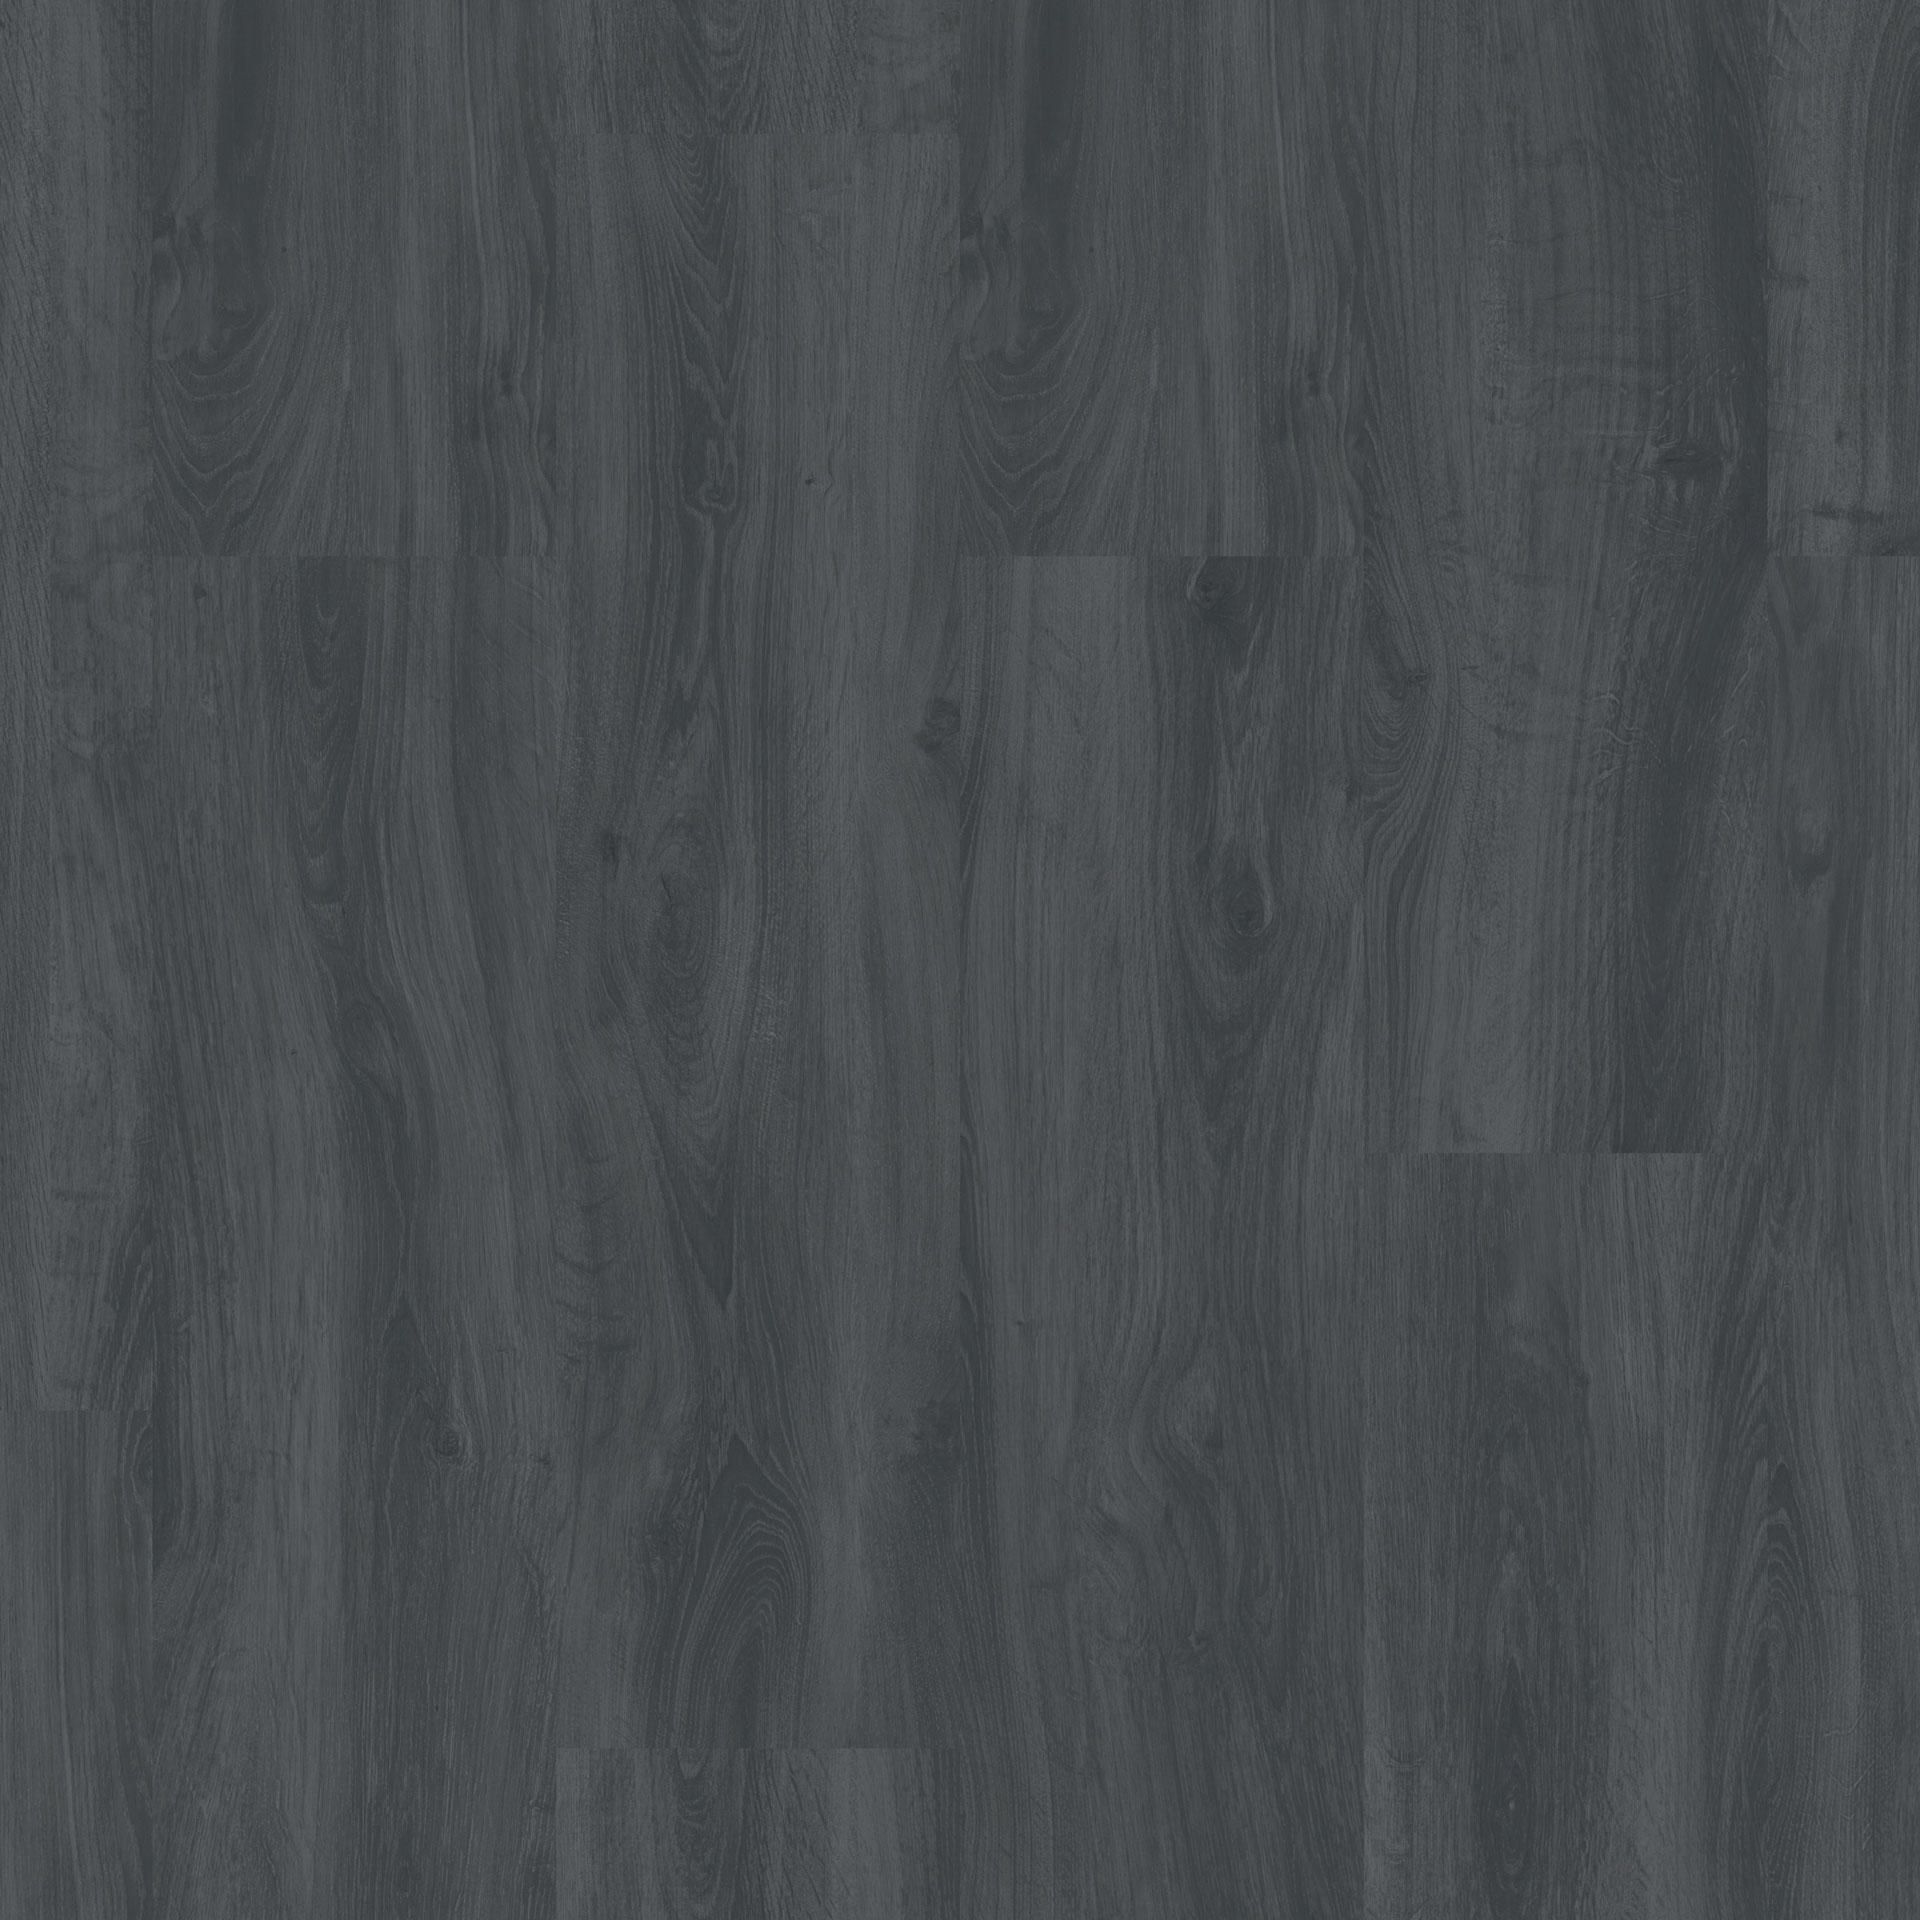 Designboden English Oak BLACK Planke 100 cm x 25 cm - Nutzschichtdicke 0,80 mm